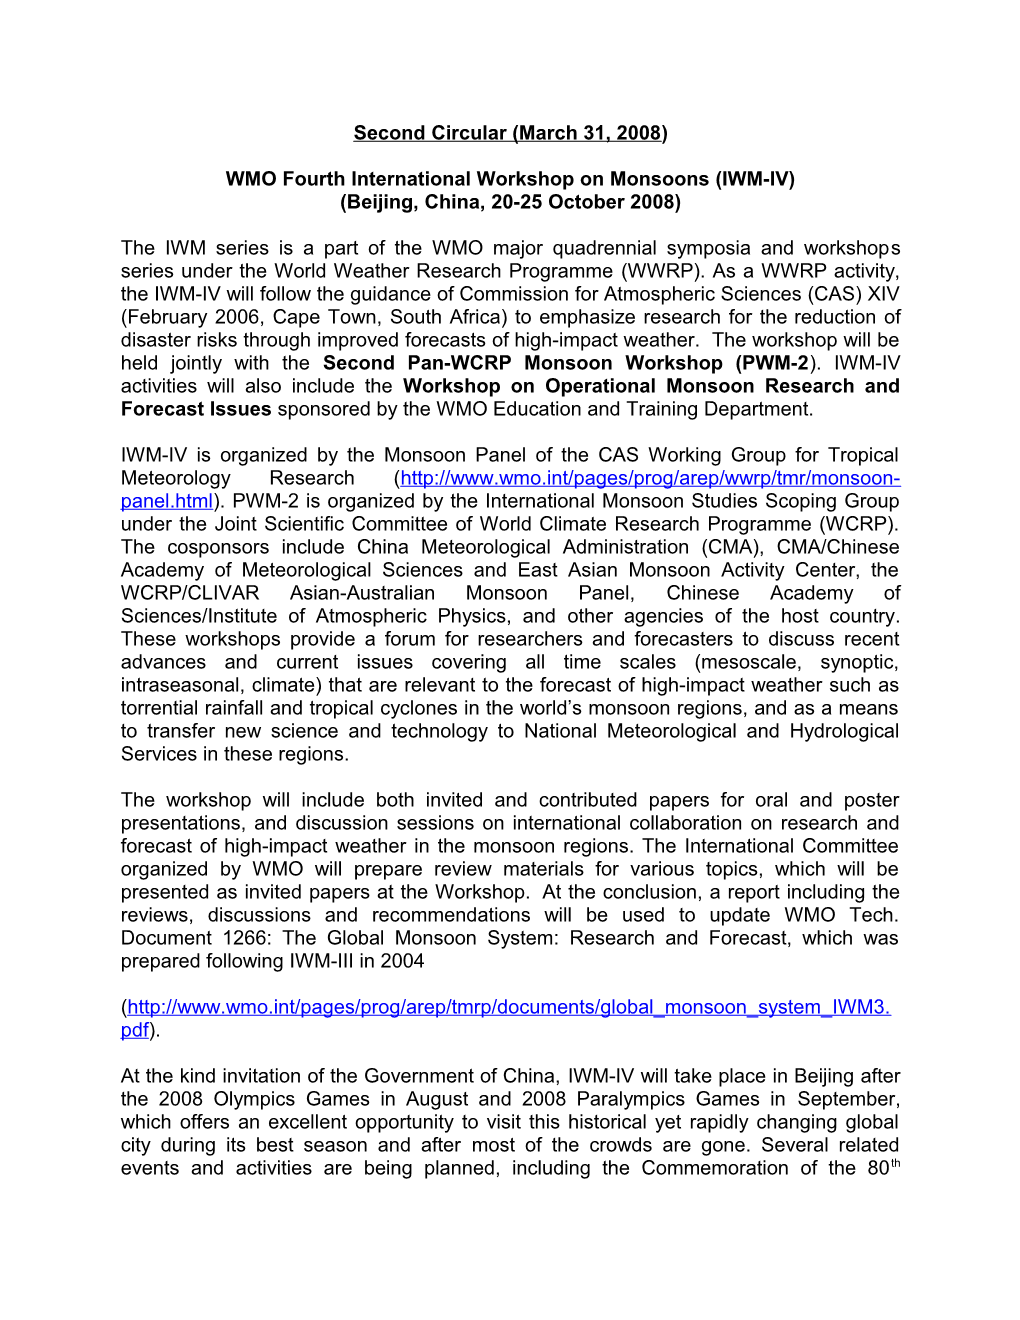 WMO Fourth International Workshop on Monsoons (IWM-IV)